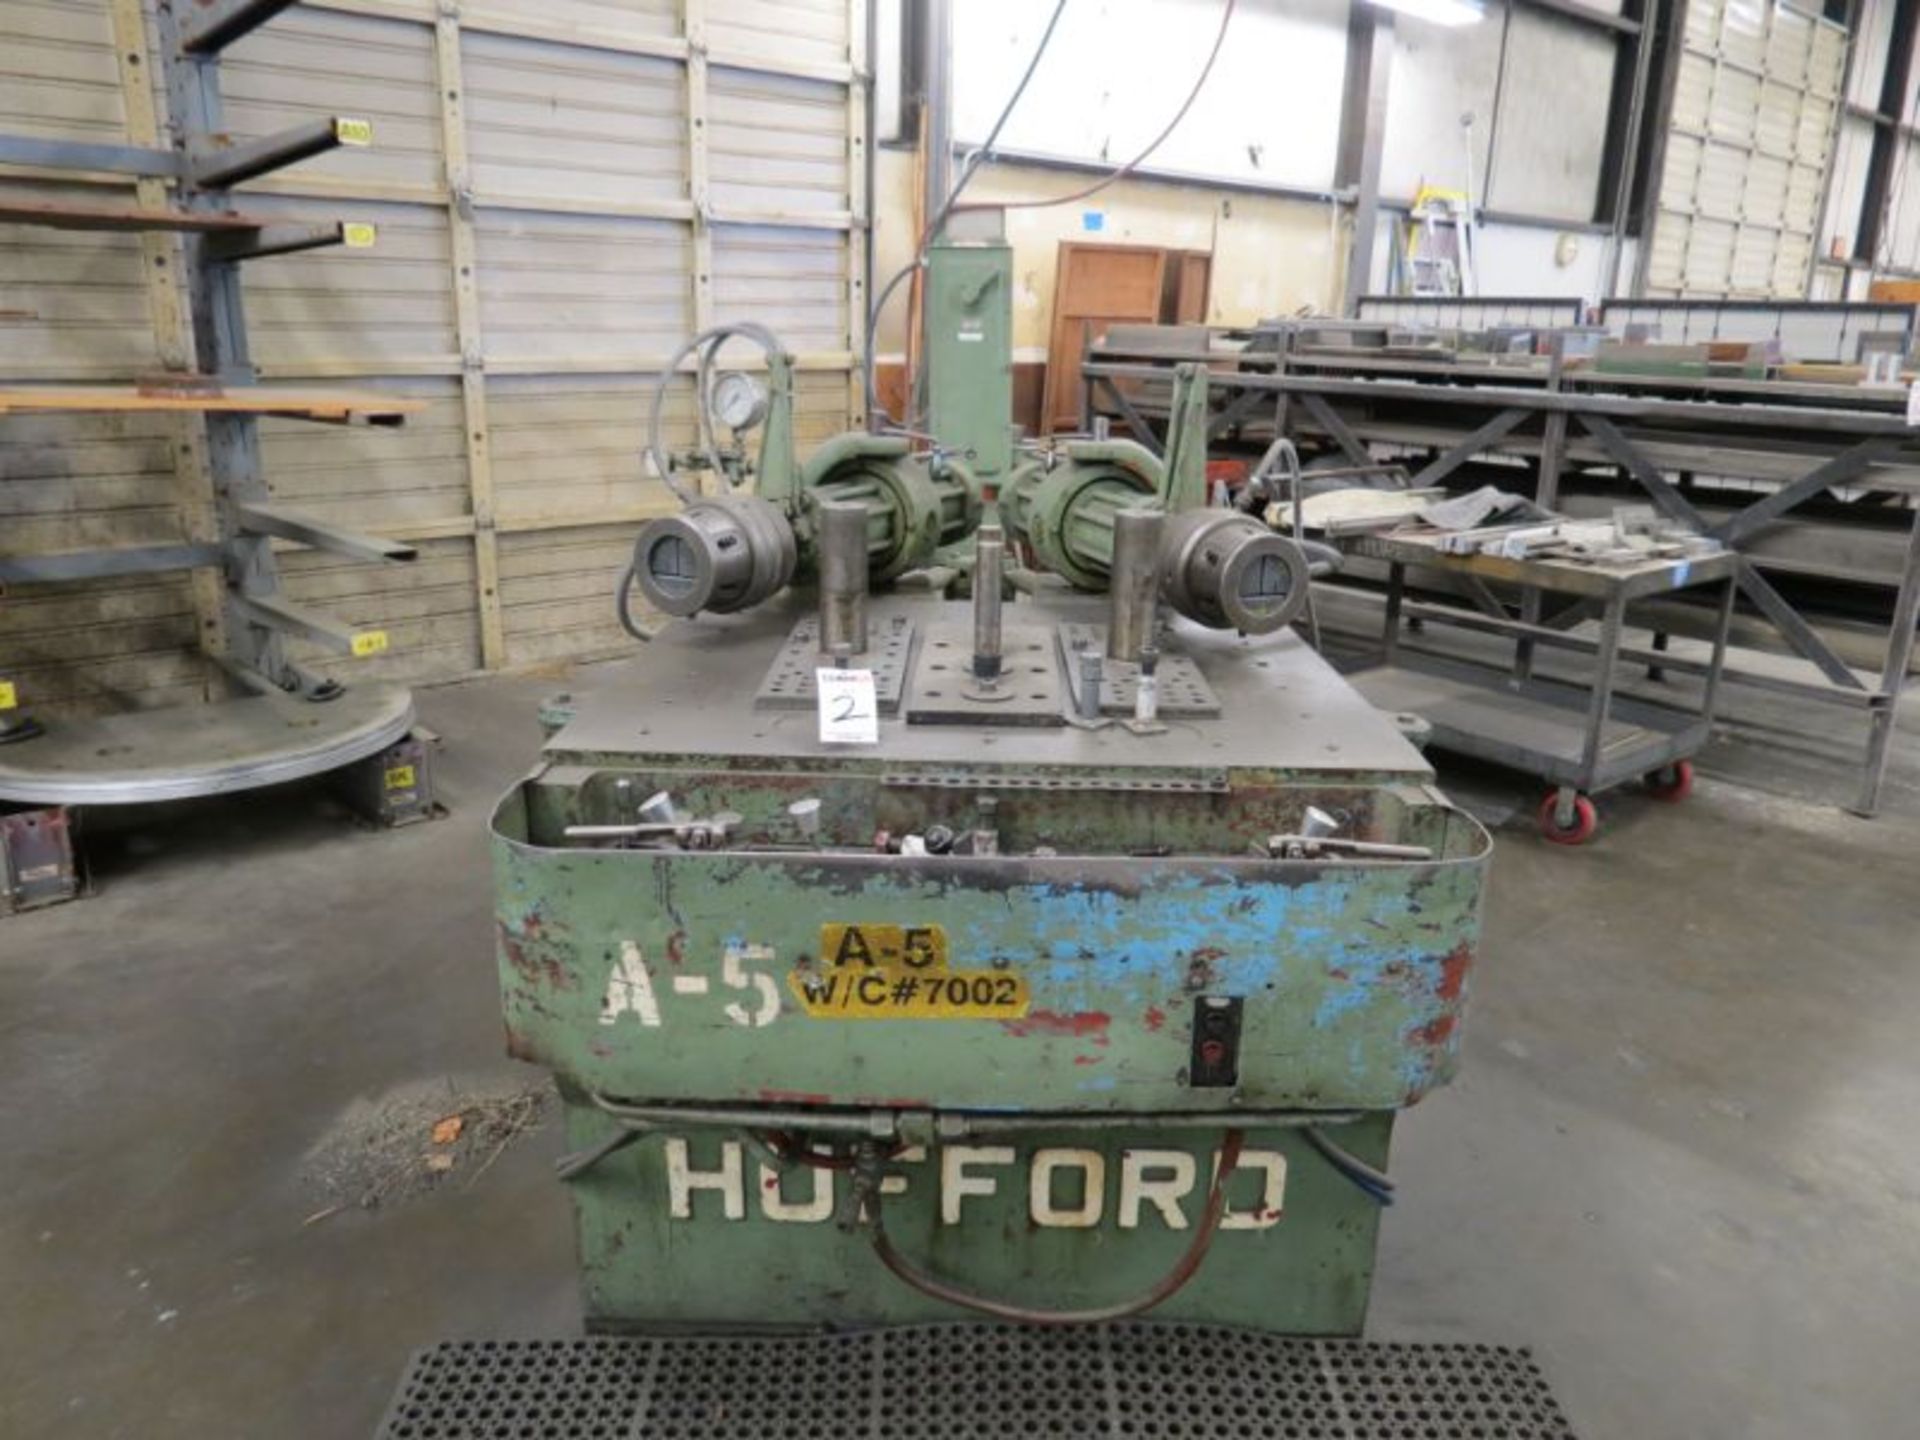 Hufford A -5 Stretch Forming Machine, s/n 56